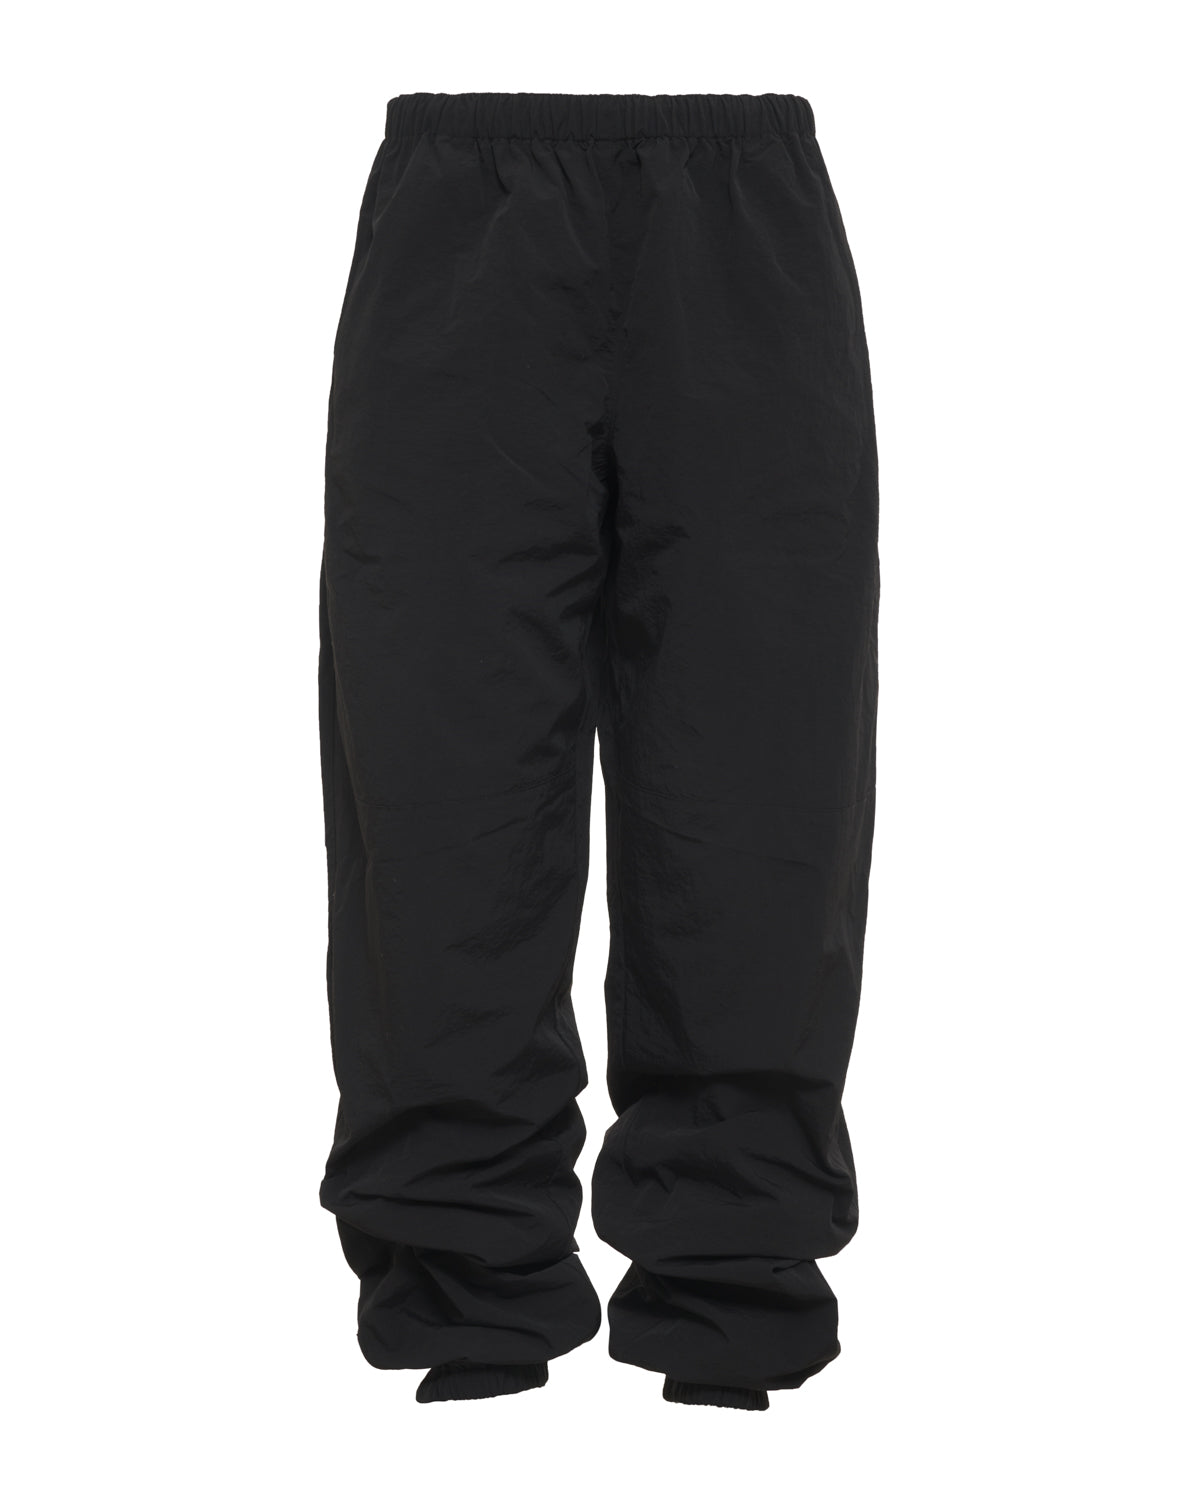 black nylon cargo style track pants elastic waist zip cuffs